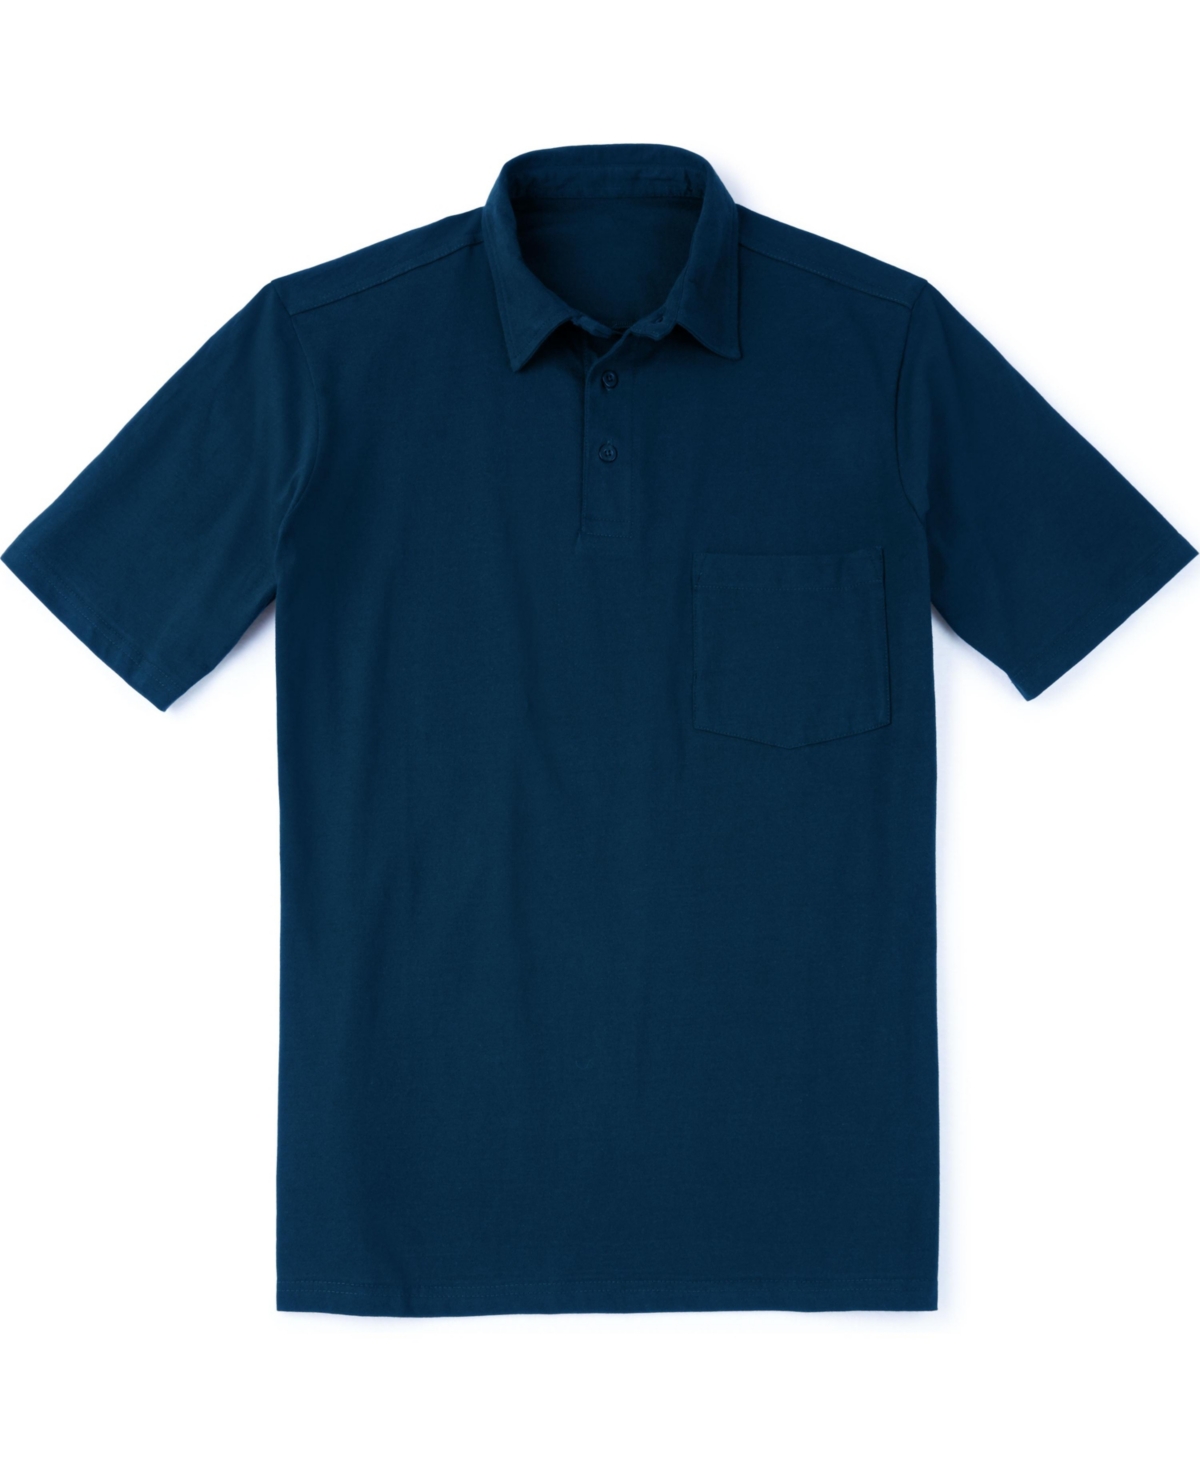 Big & Tall Heavyweight Jersey Polo Shirt - Navy